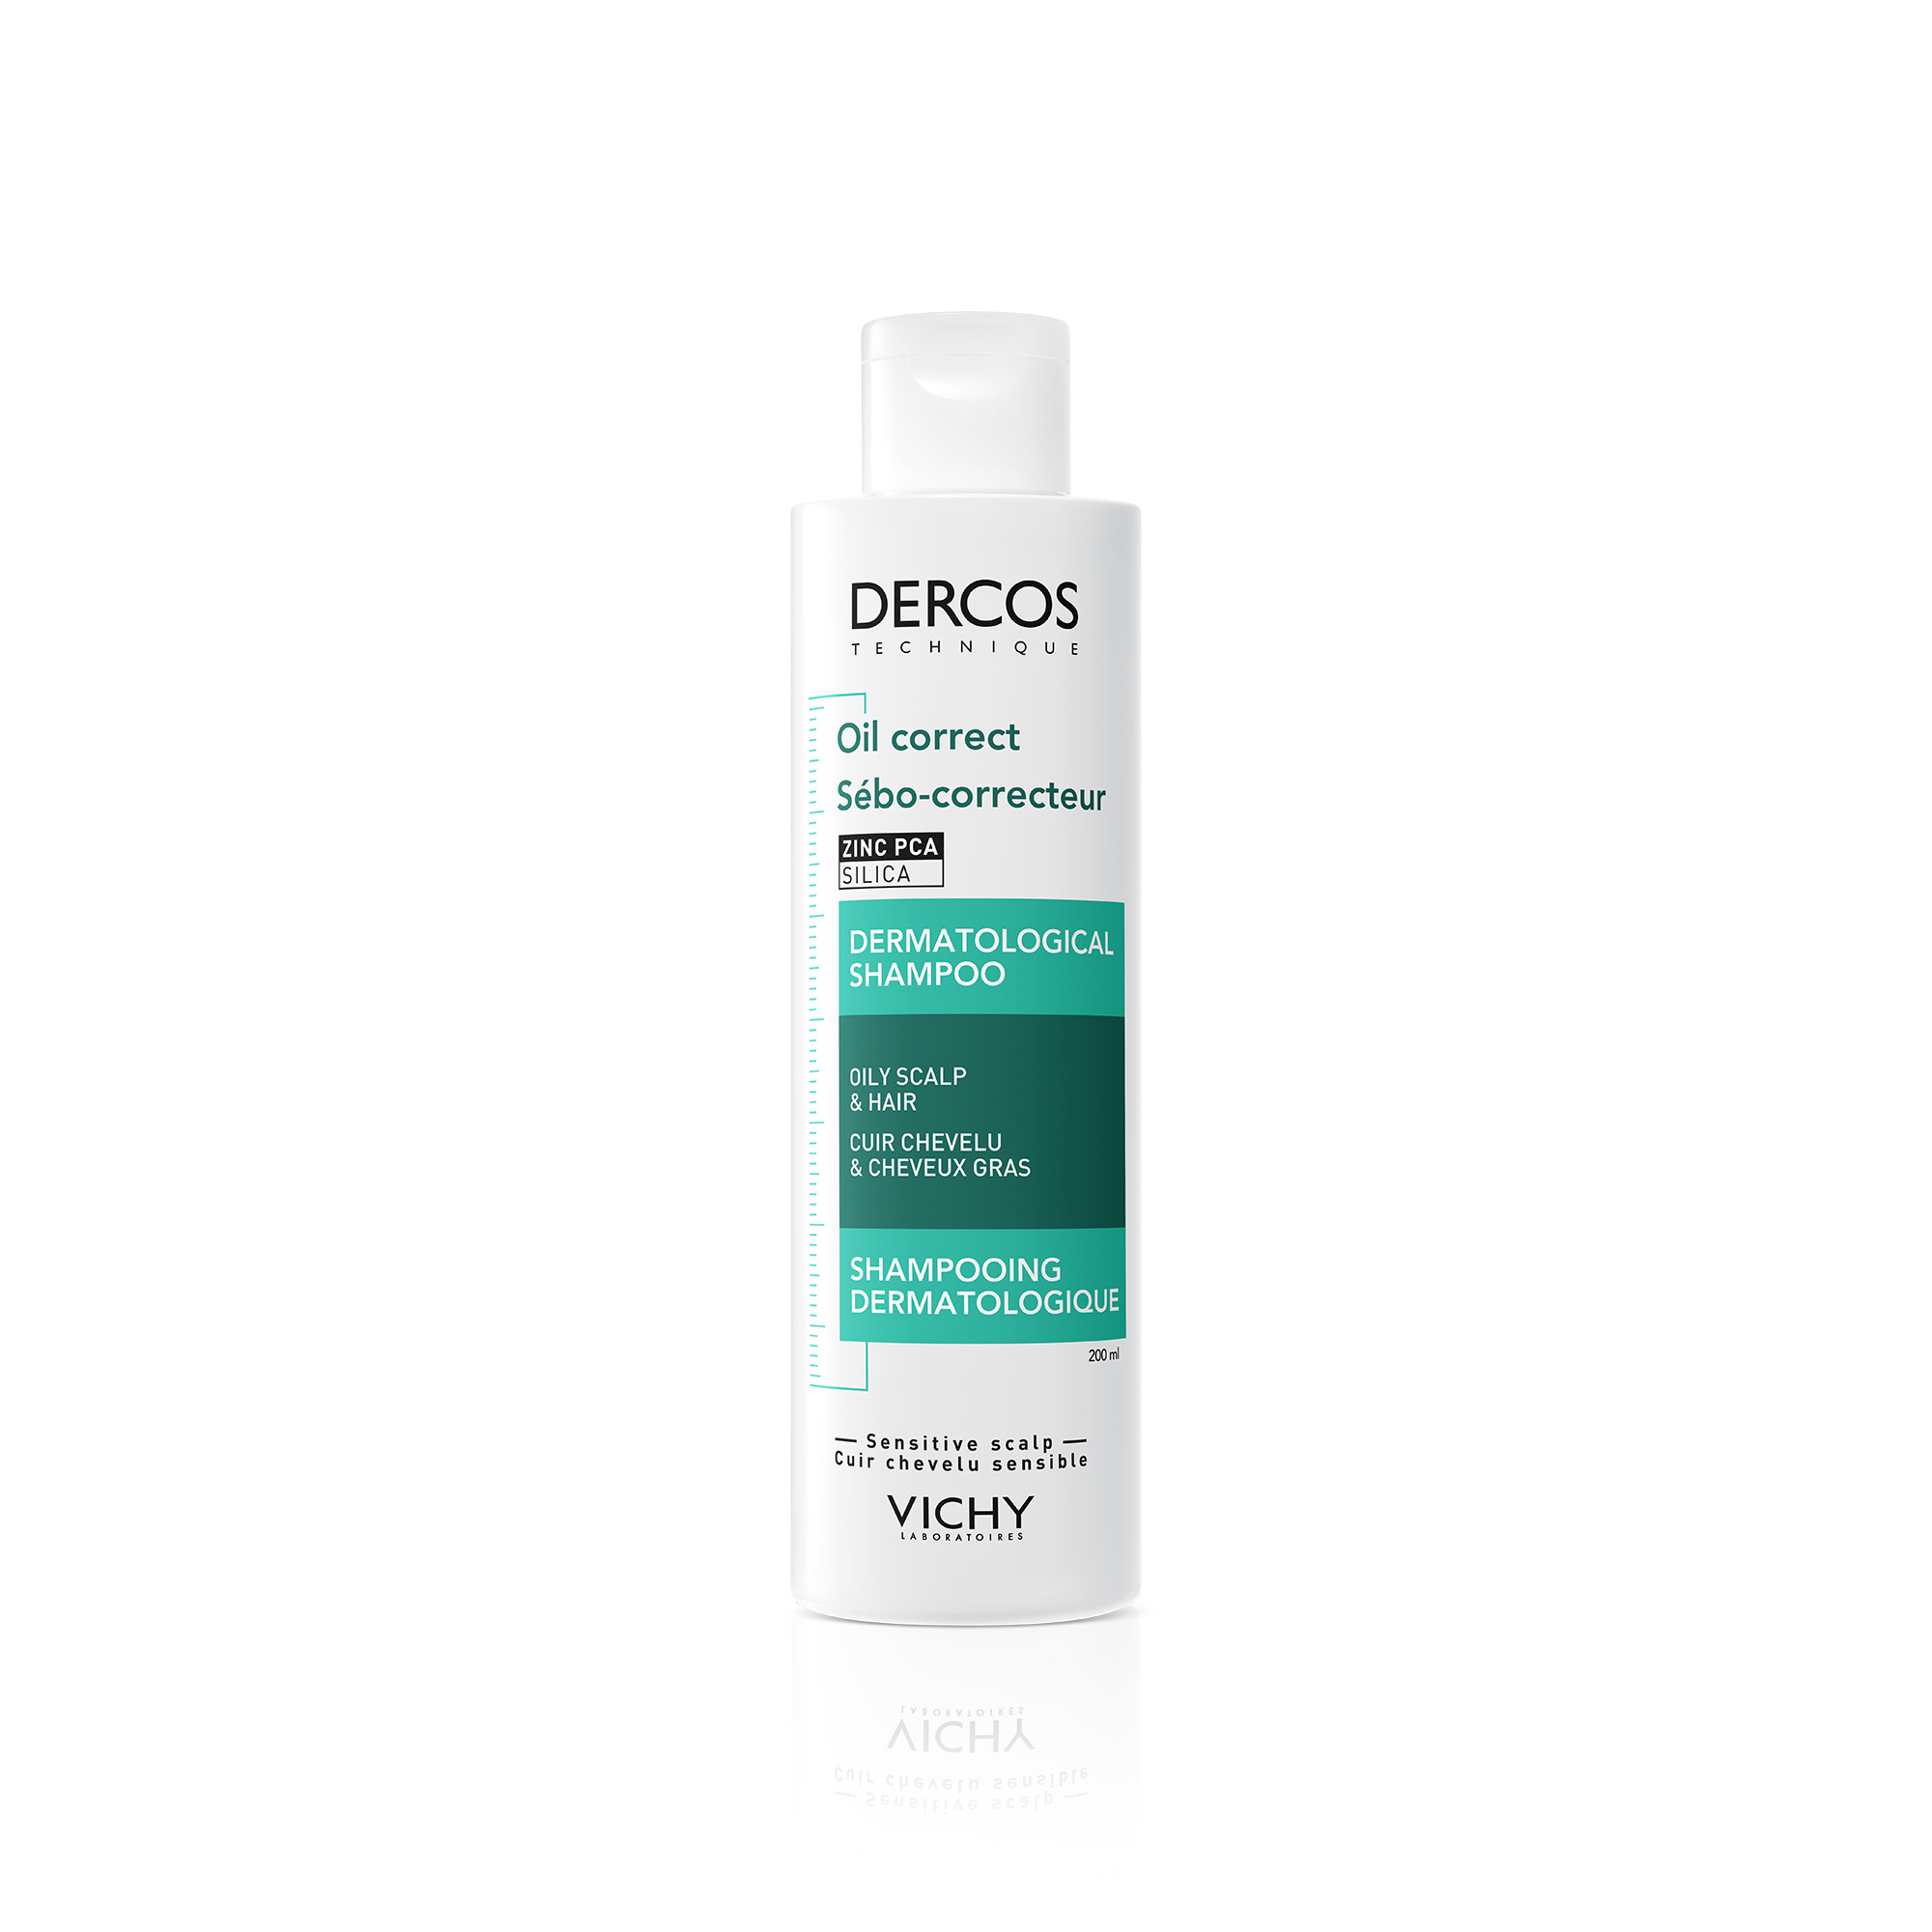 Vichy Dercos Technique Shampoo Oil Control - 200ml